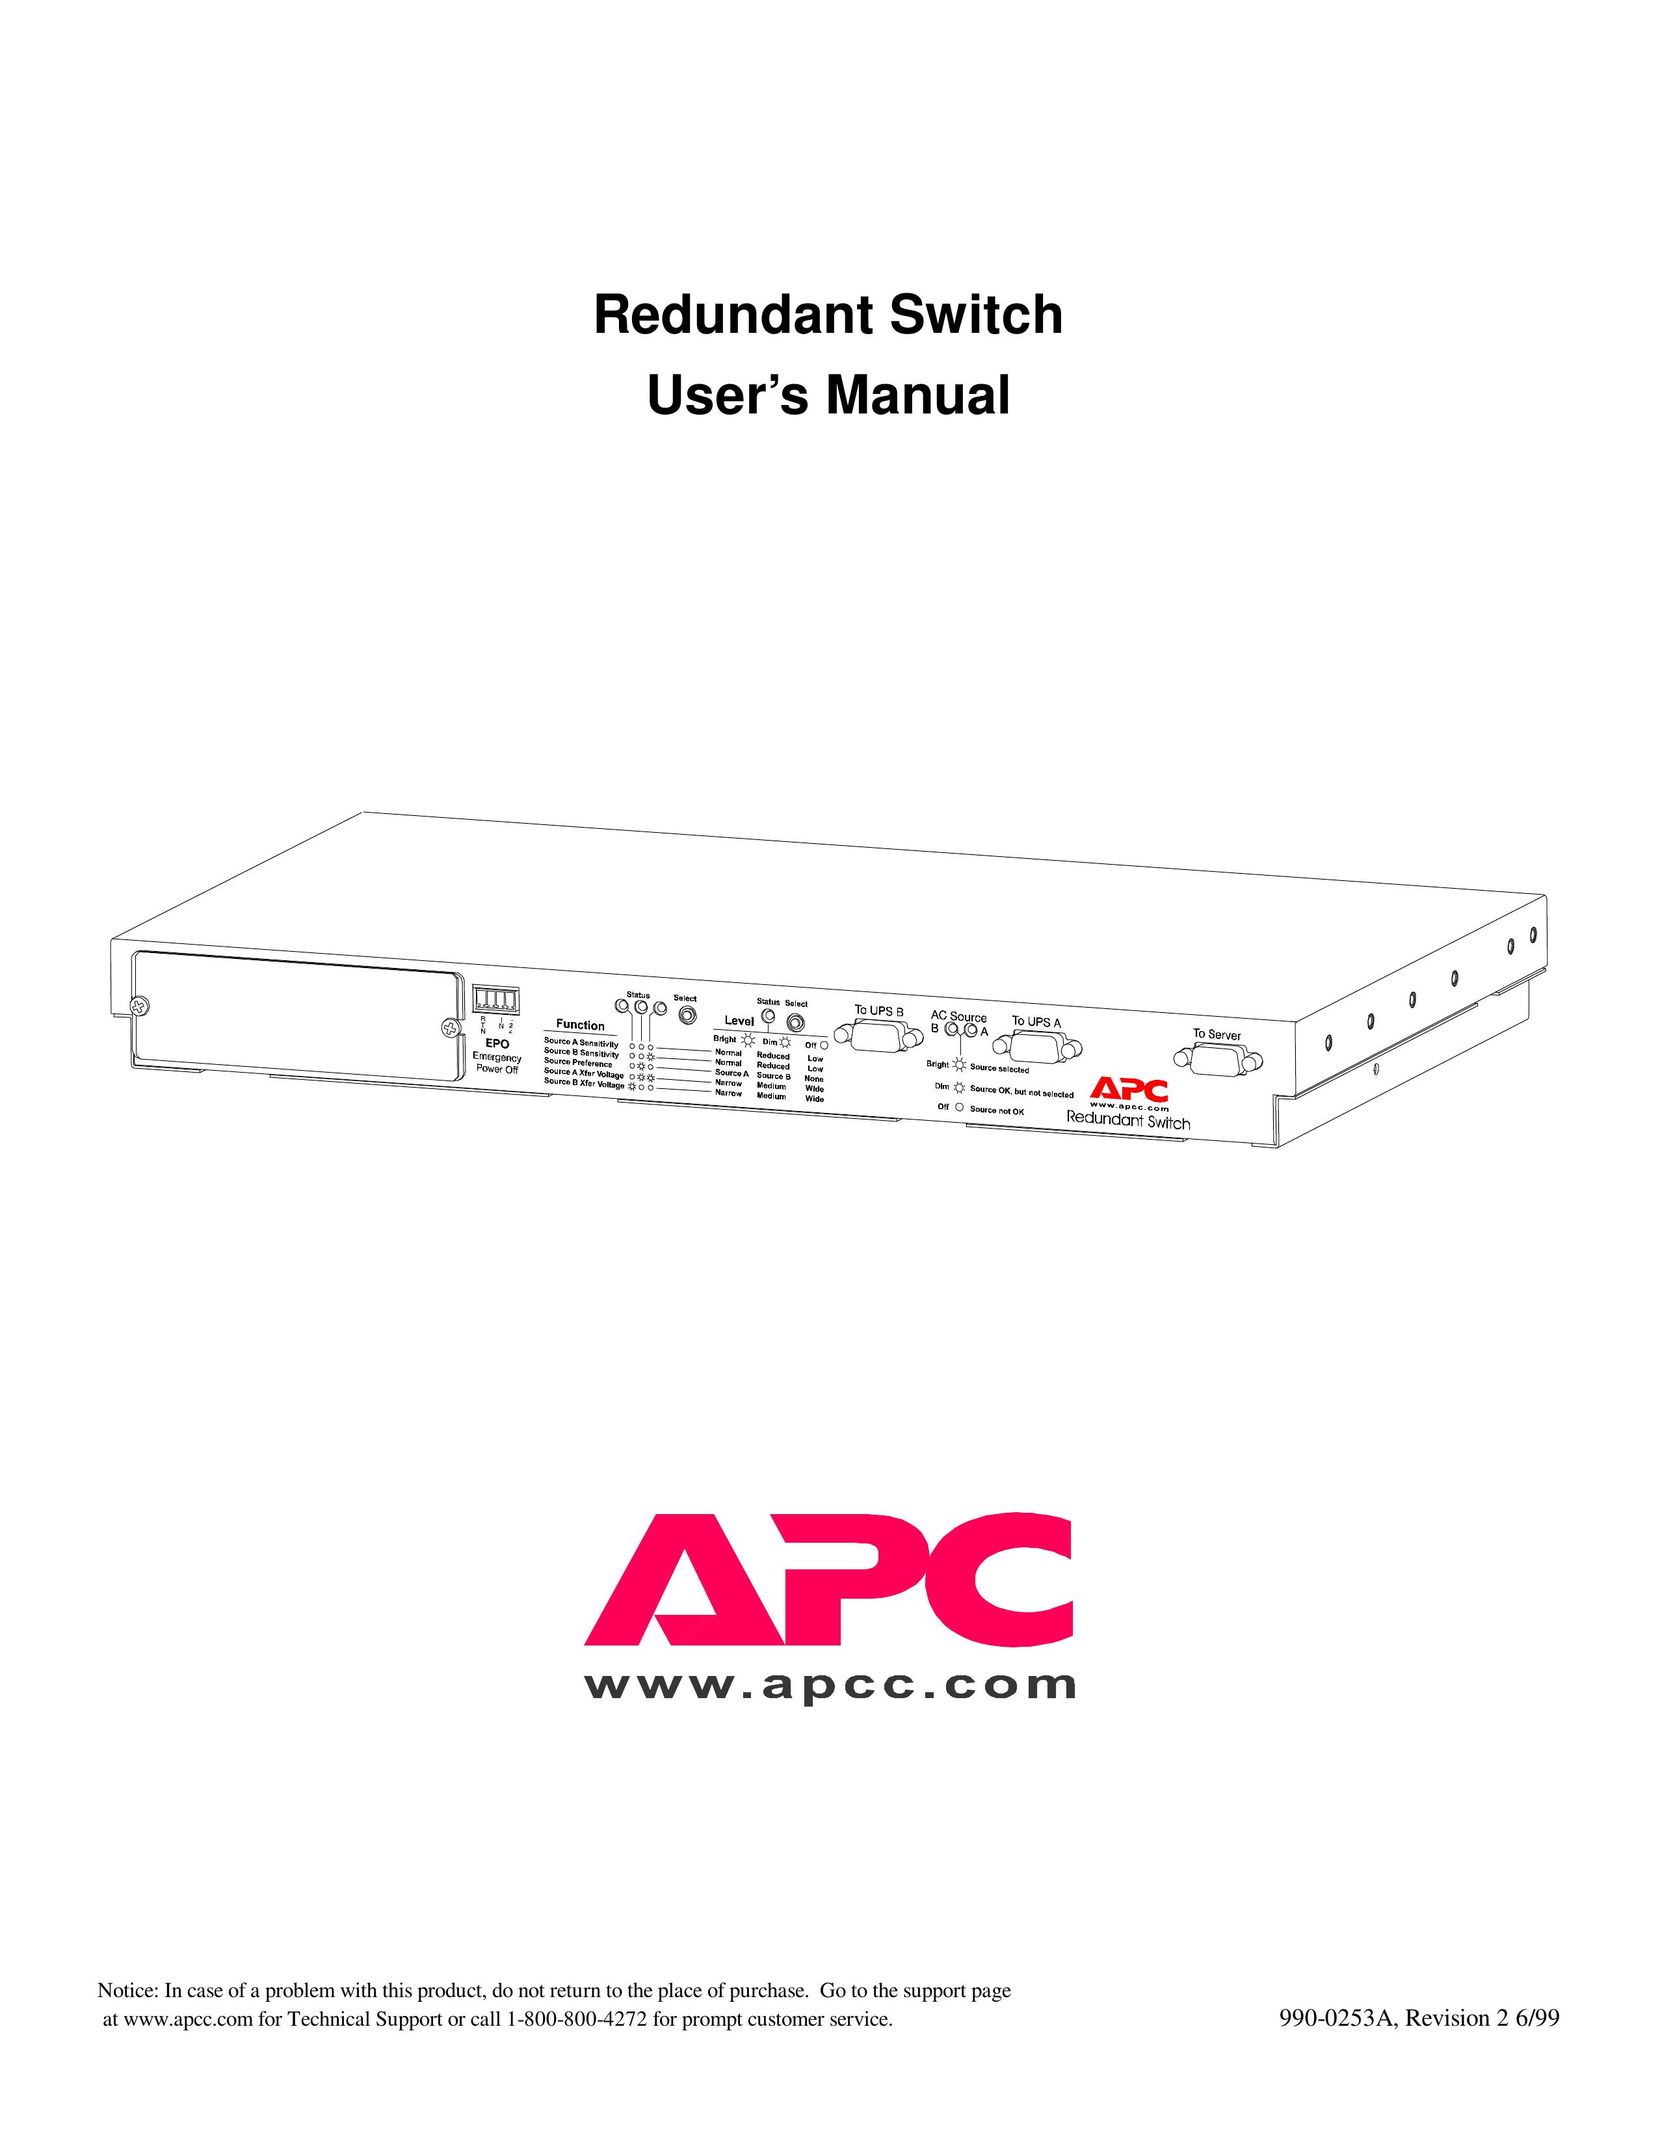 APC SU041 1400 VA Switch User Manual